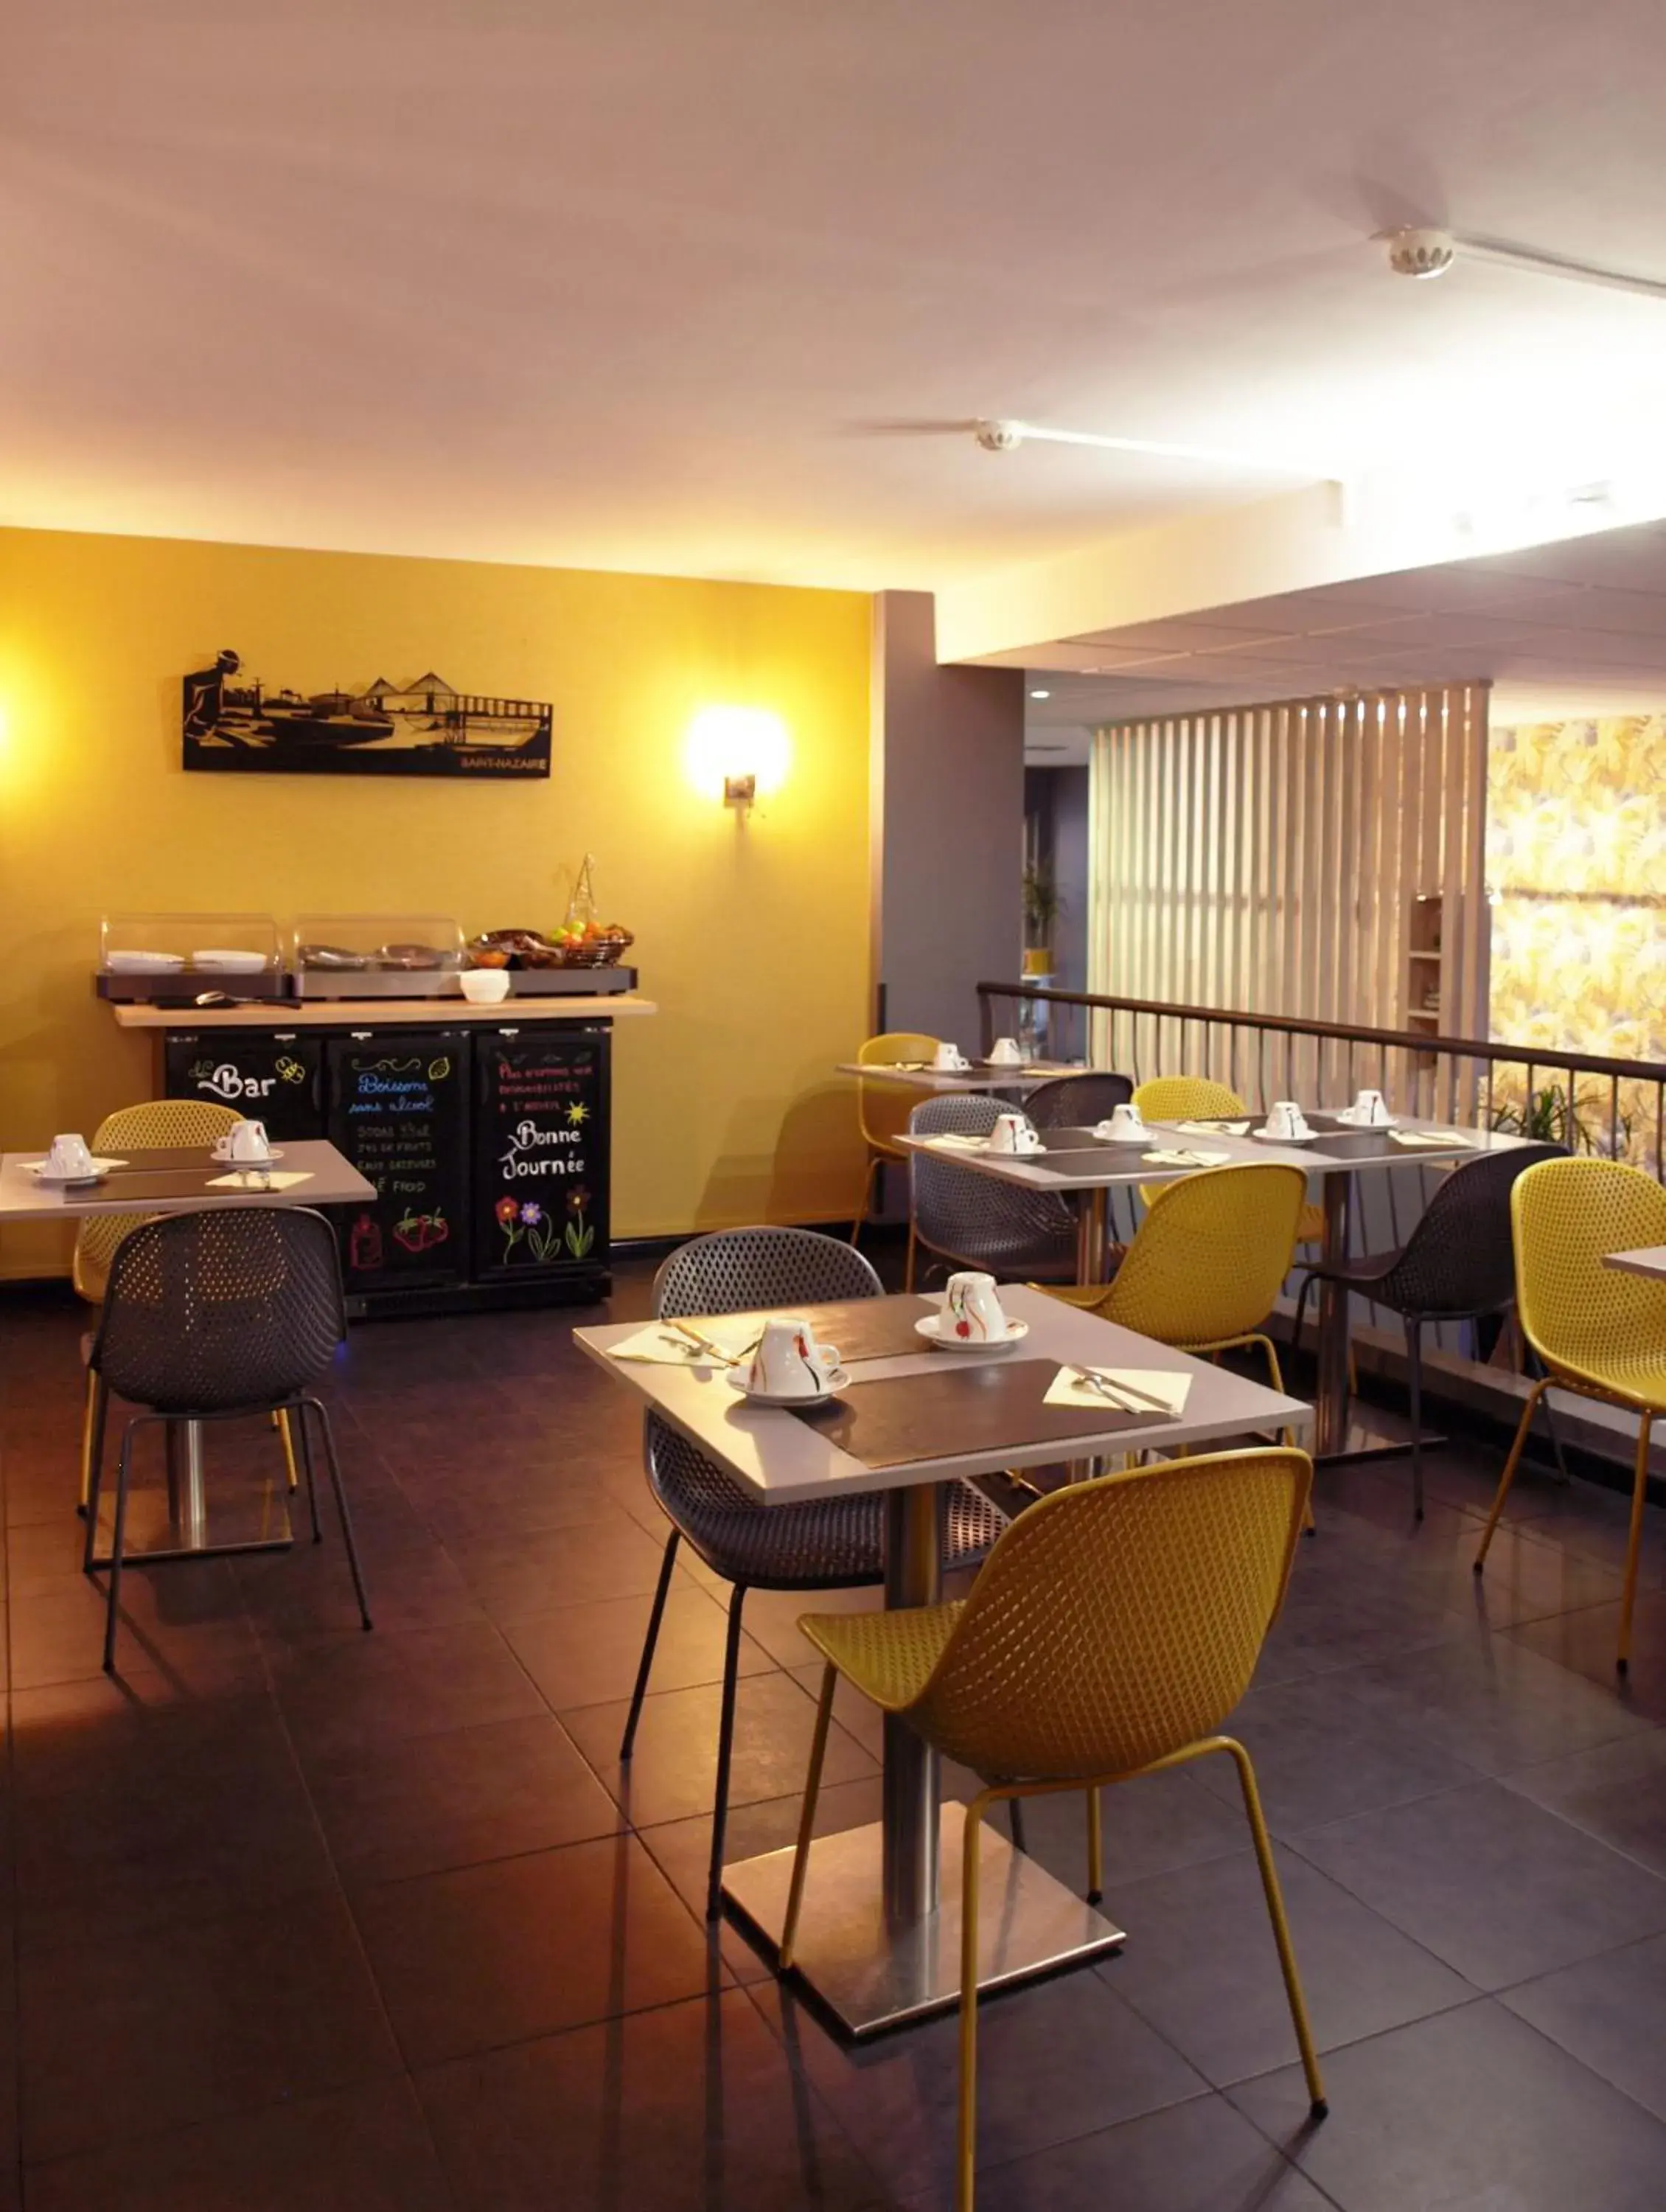 Breakfast, Restaurant/Places to Eat in The Originals City, Hotel de l'Europe, Saint-Nazaire